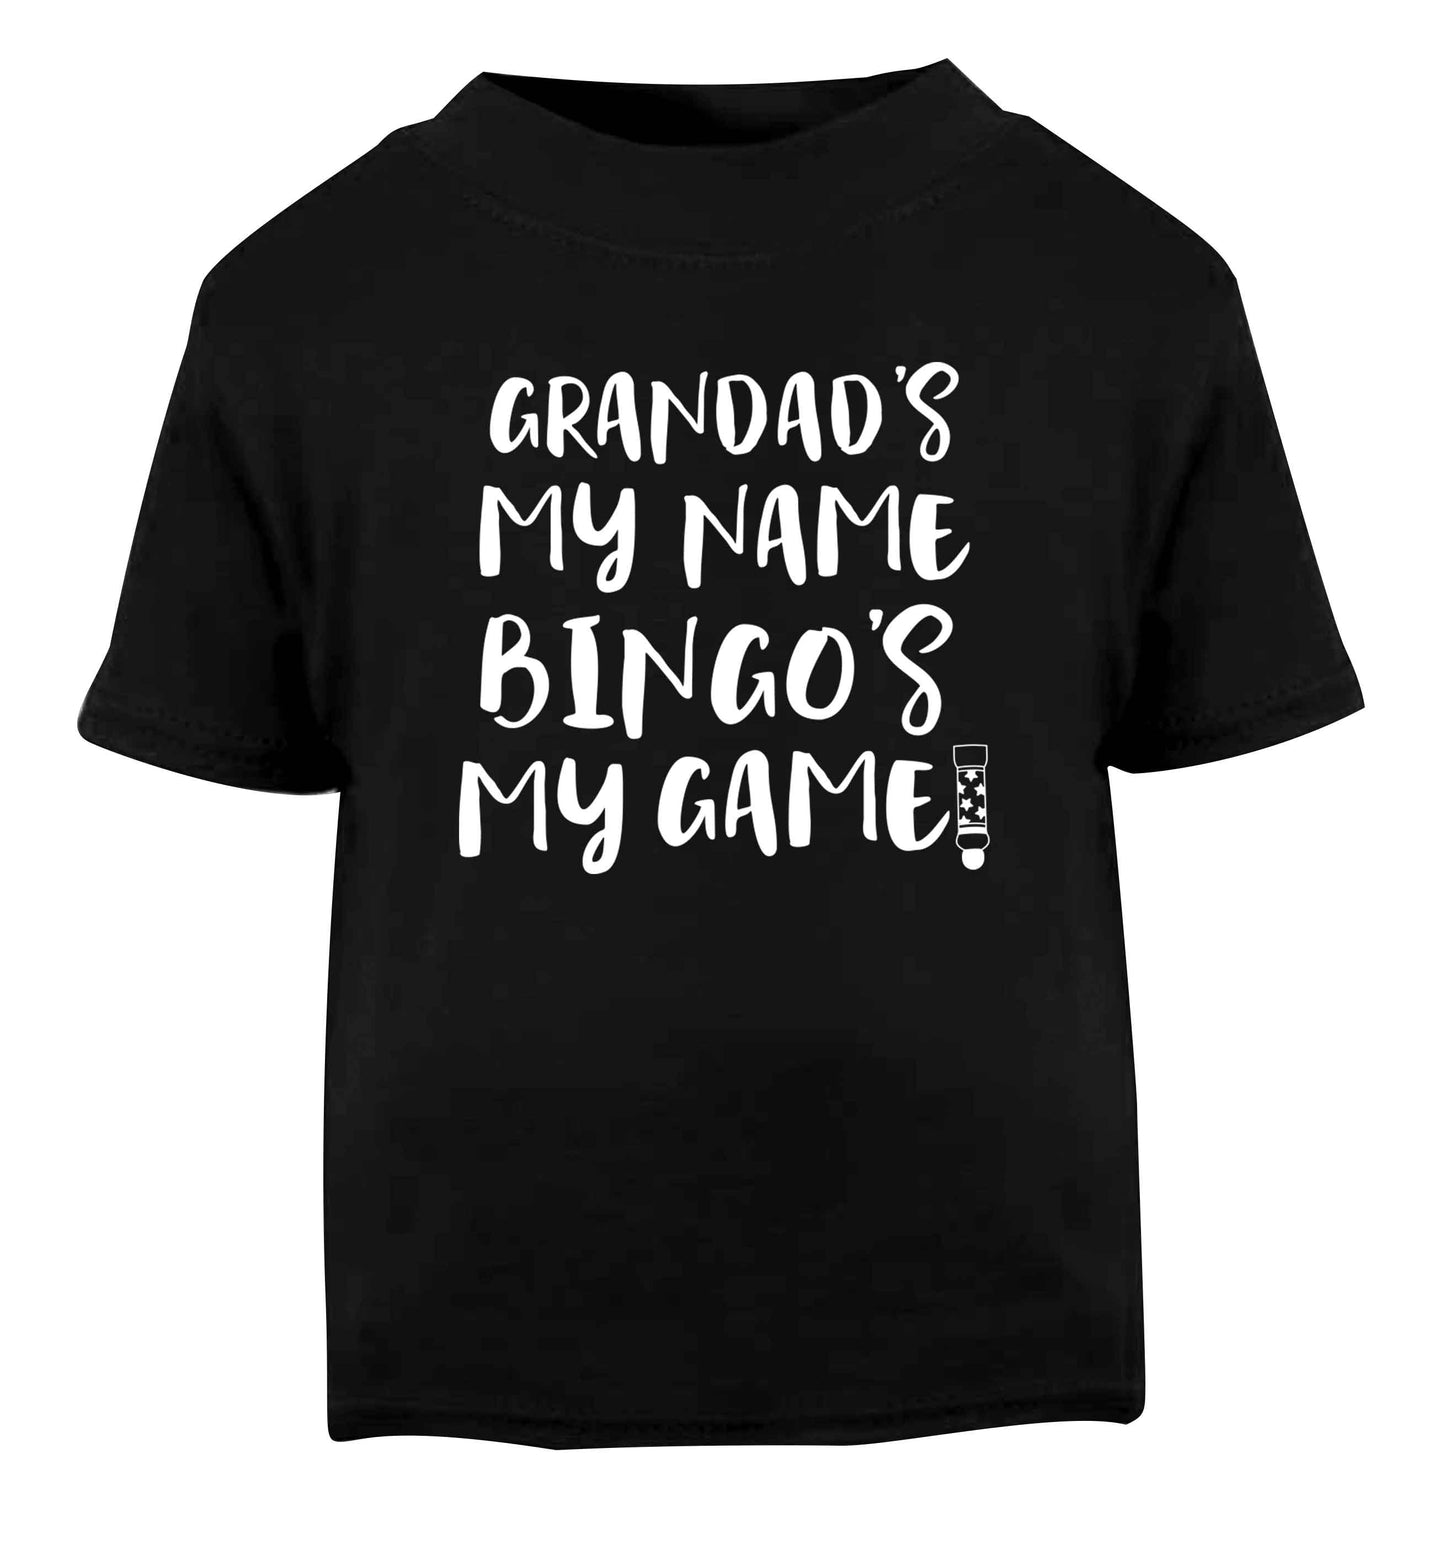 Grandad's my name bingo's my game! Black Baby Toddler Tshirt 2 years